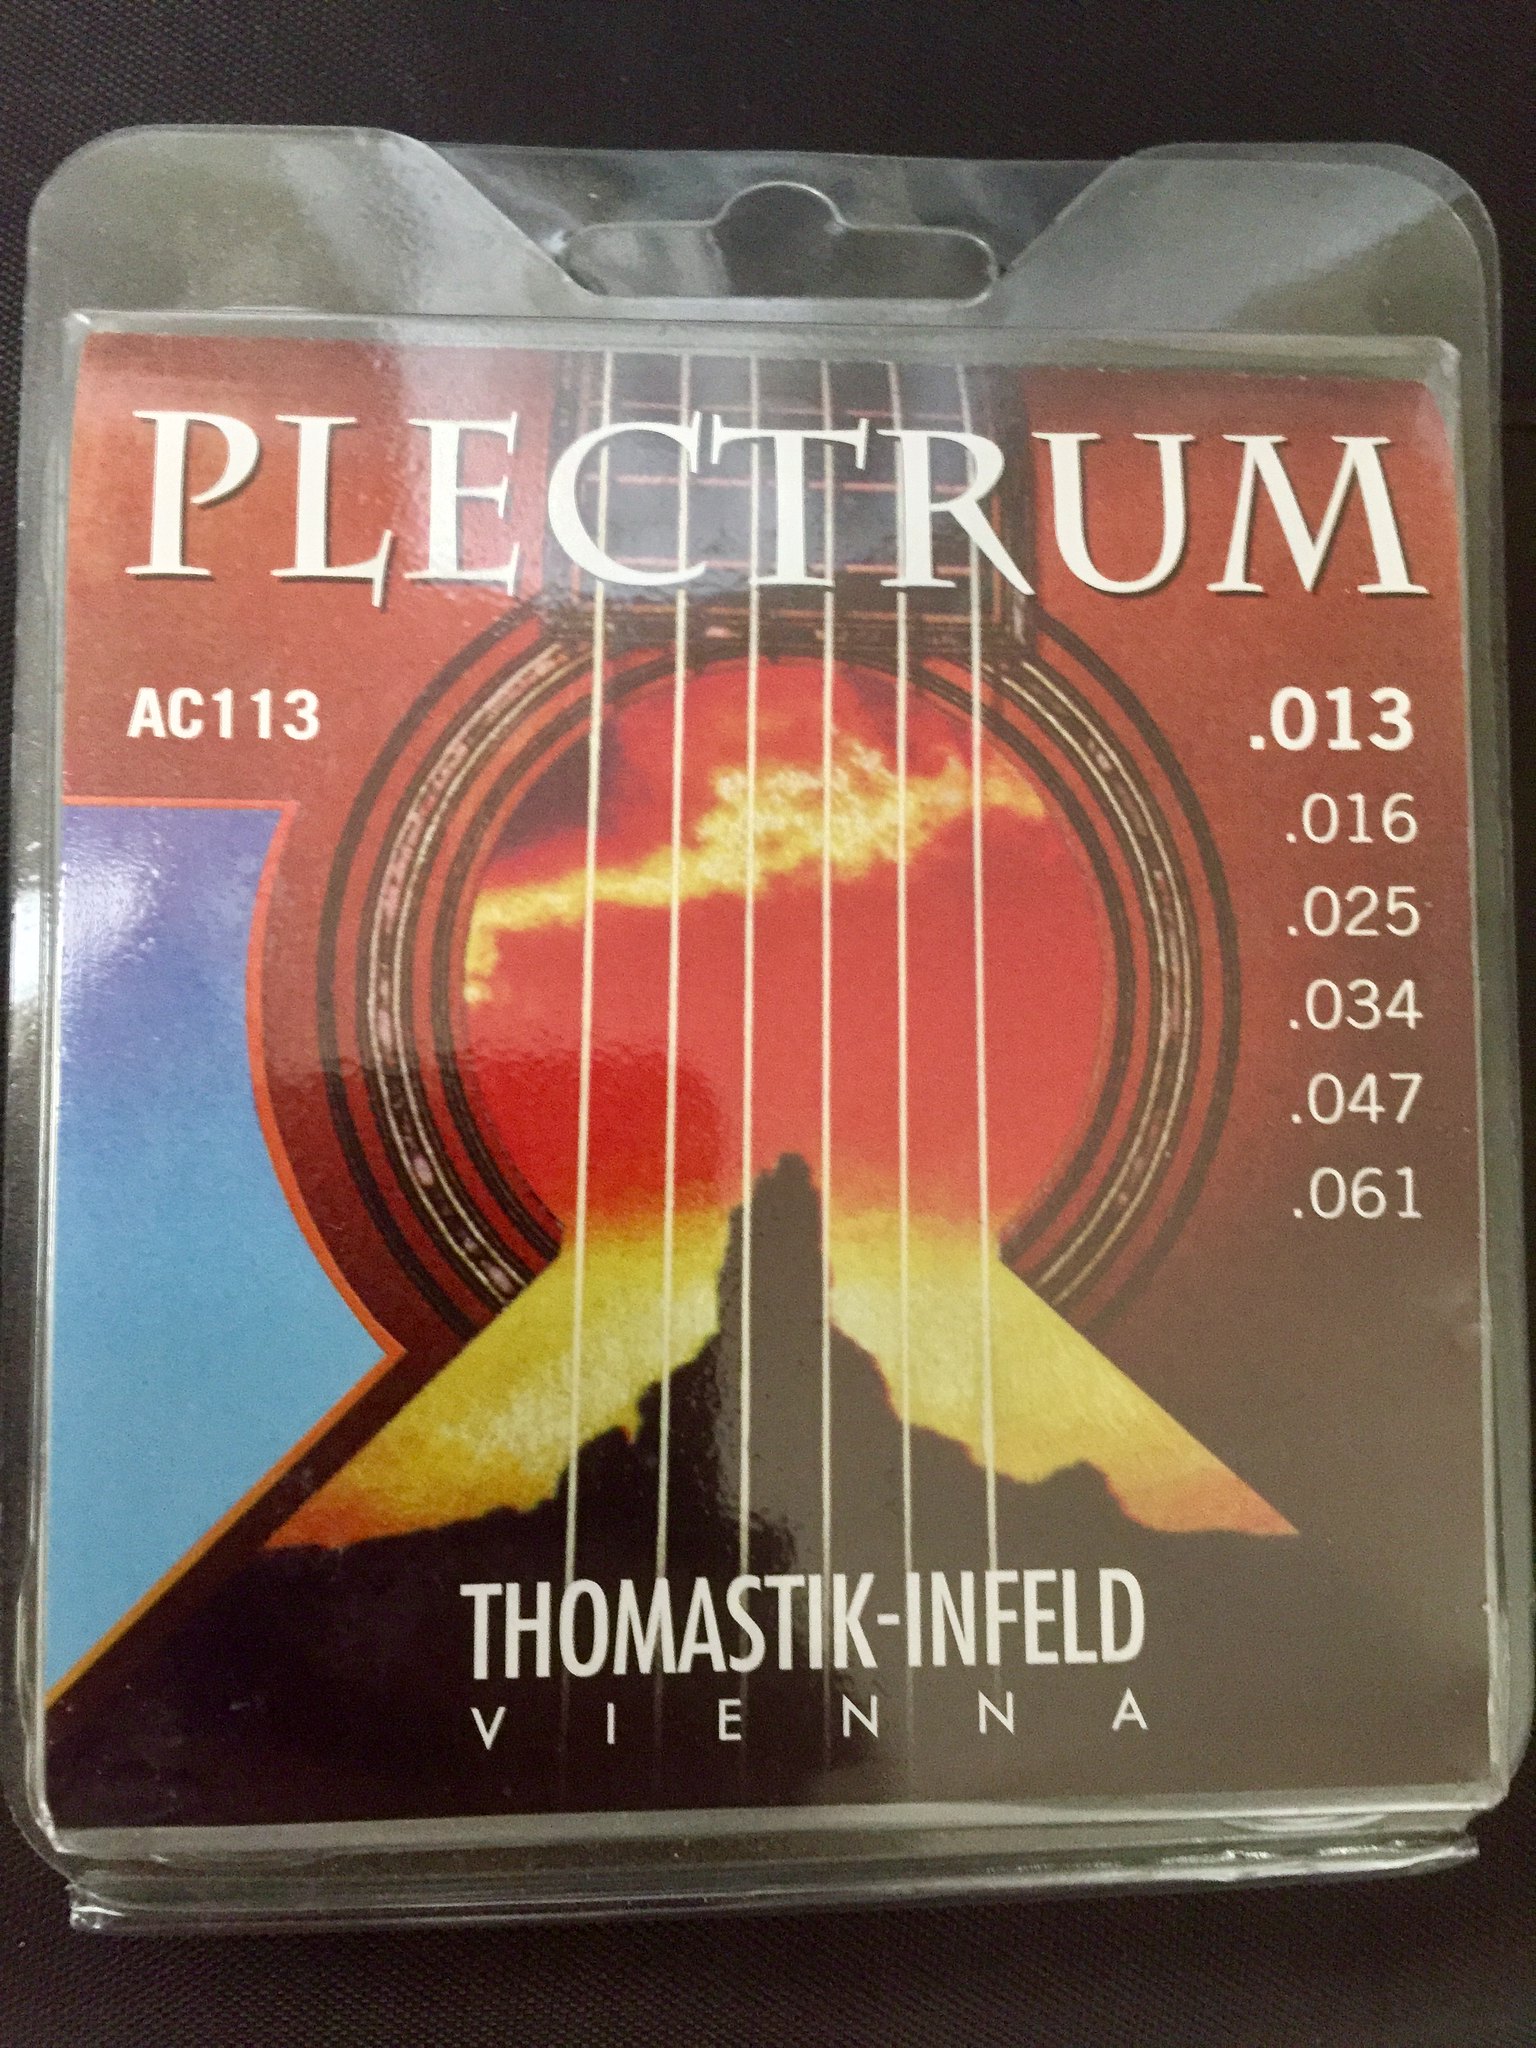 Thomastik-Infeld Plectrum Strings